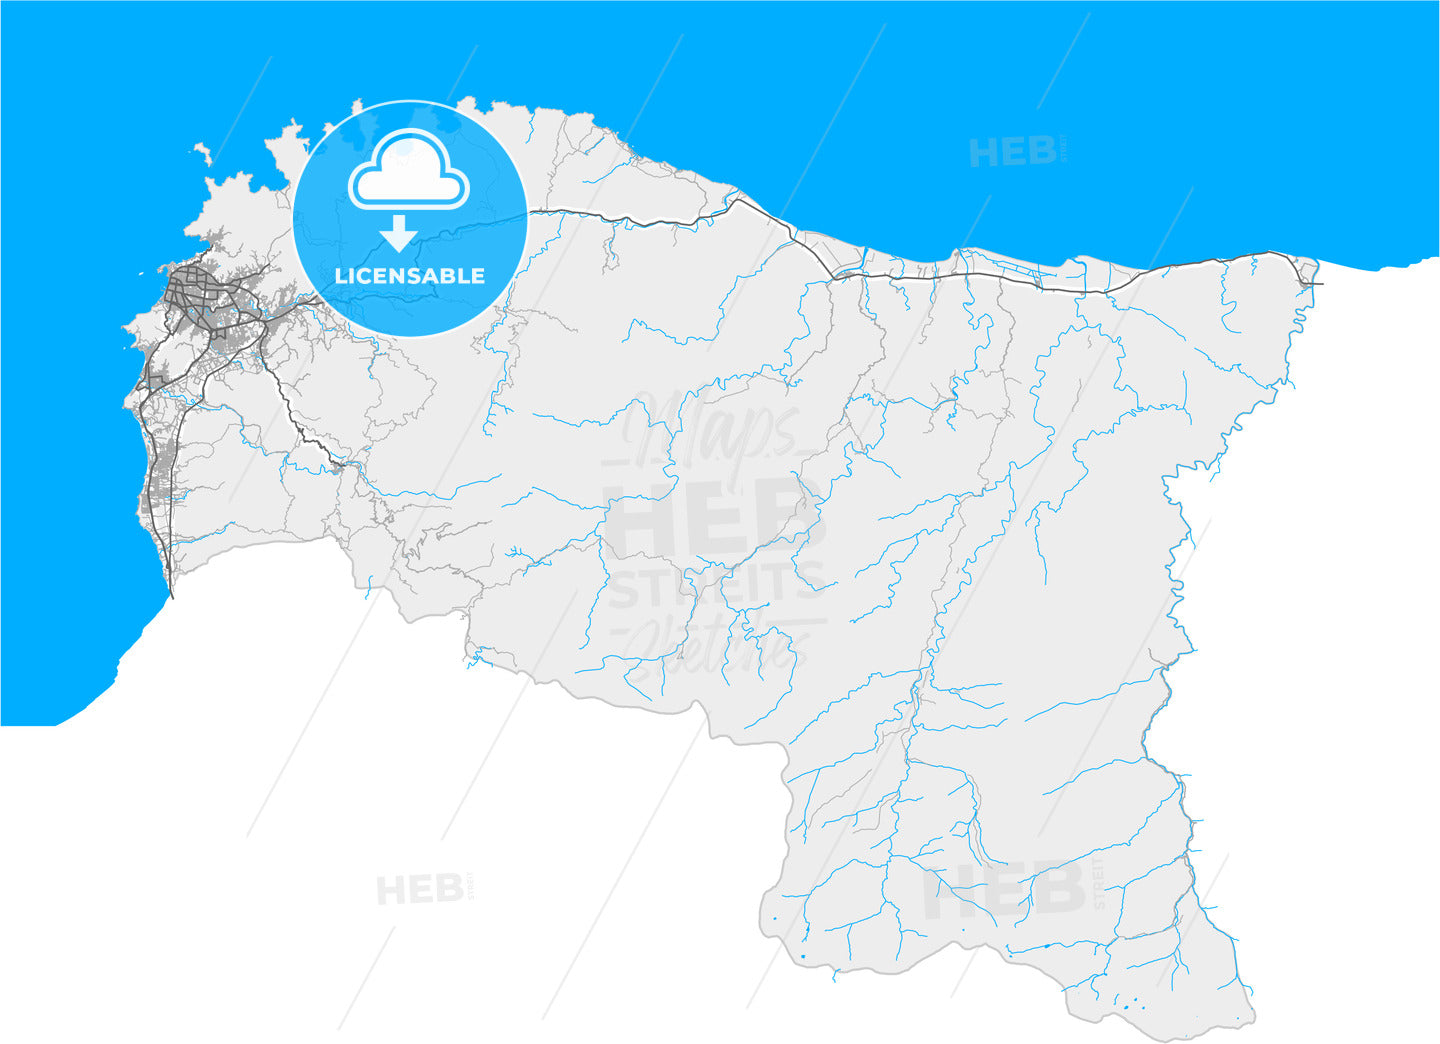 Santa Marta, Colombia, high quality vector map